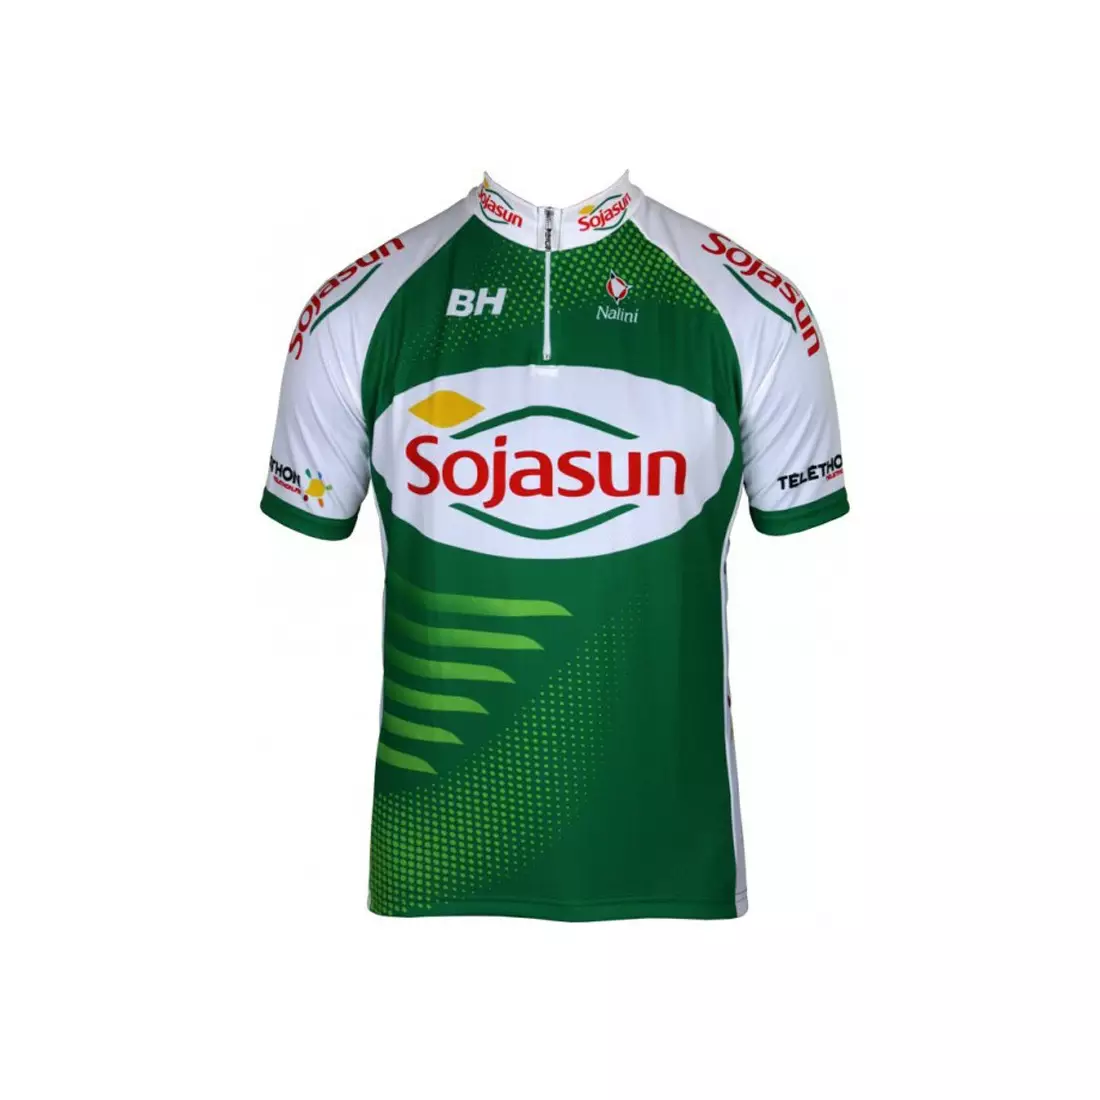 NALINI - TEAM SOJASUN 2013 - cyklistický dres